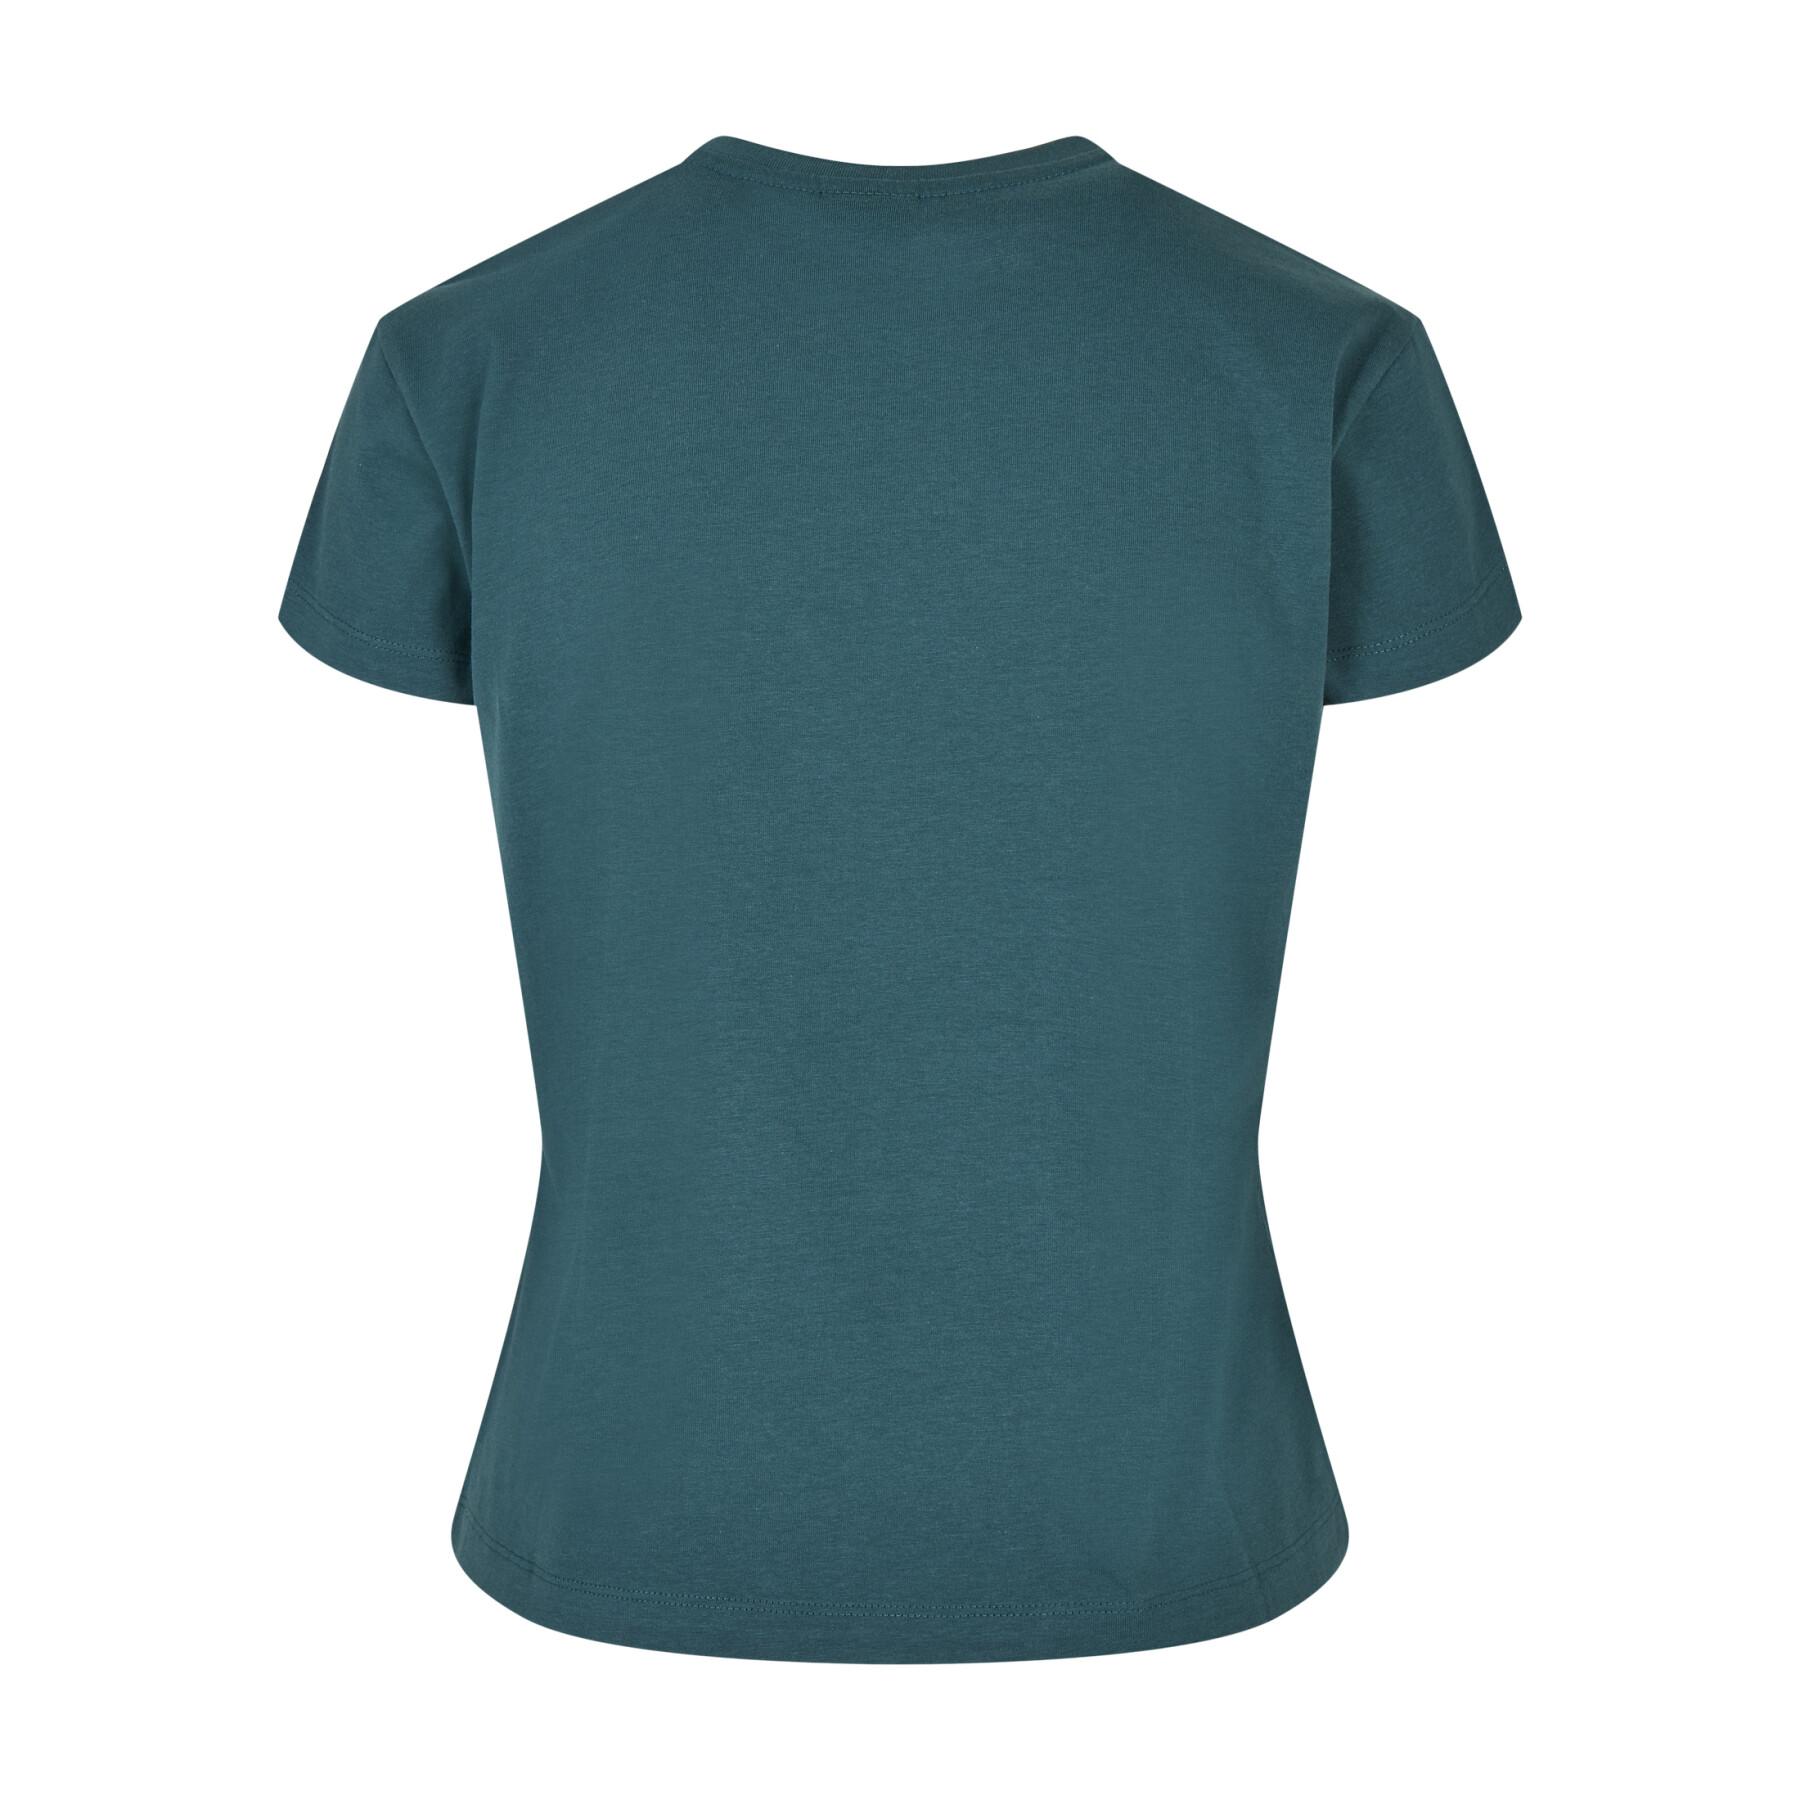 Damen-T-Shirt Urban Classics basic box-grandes tailles